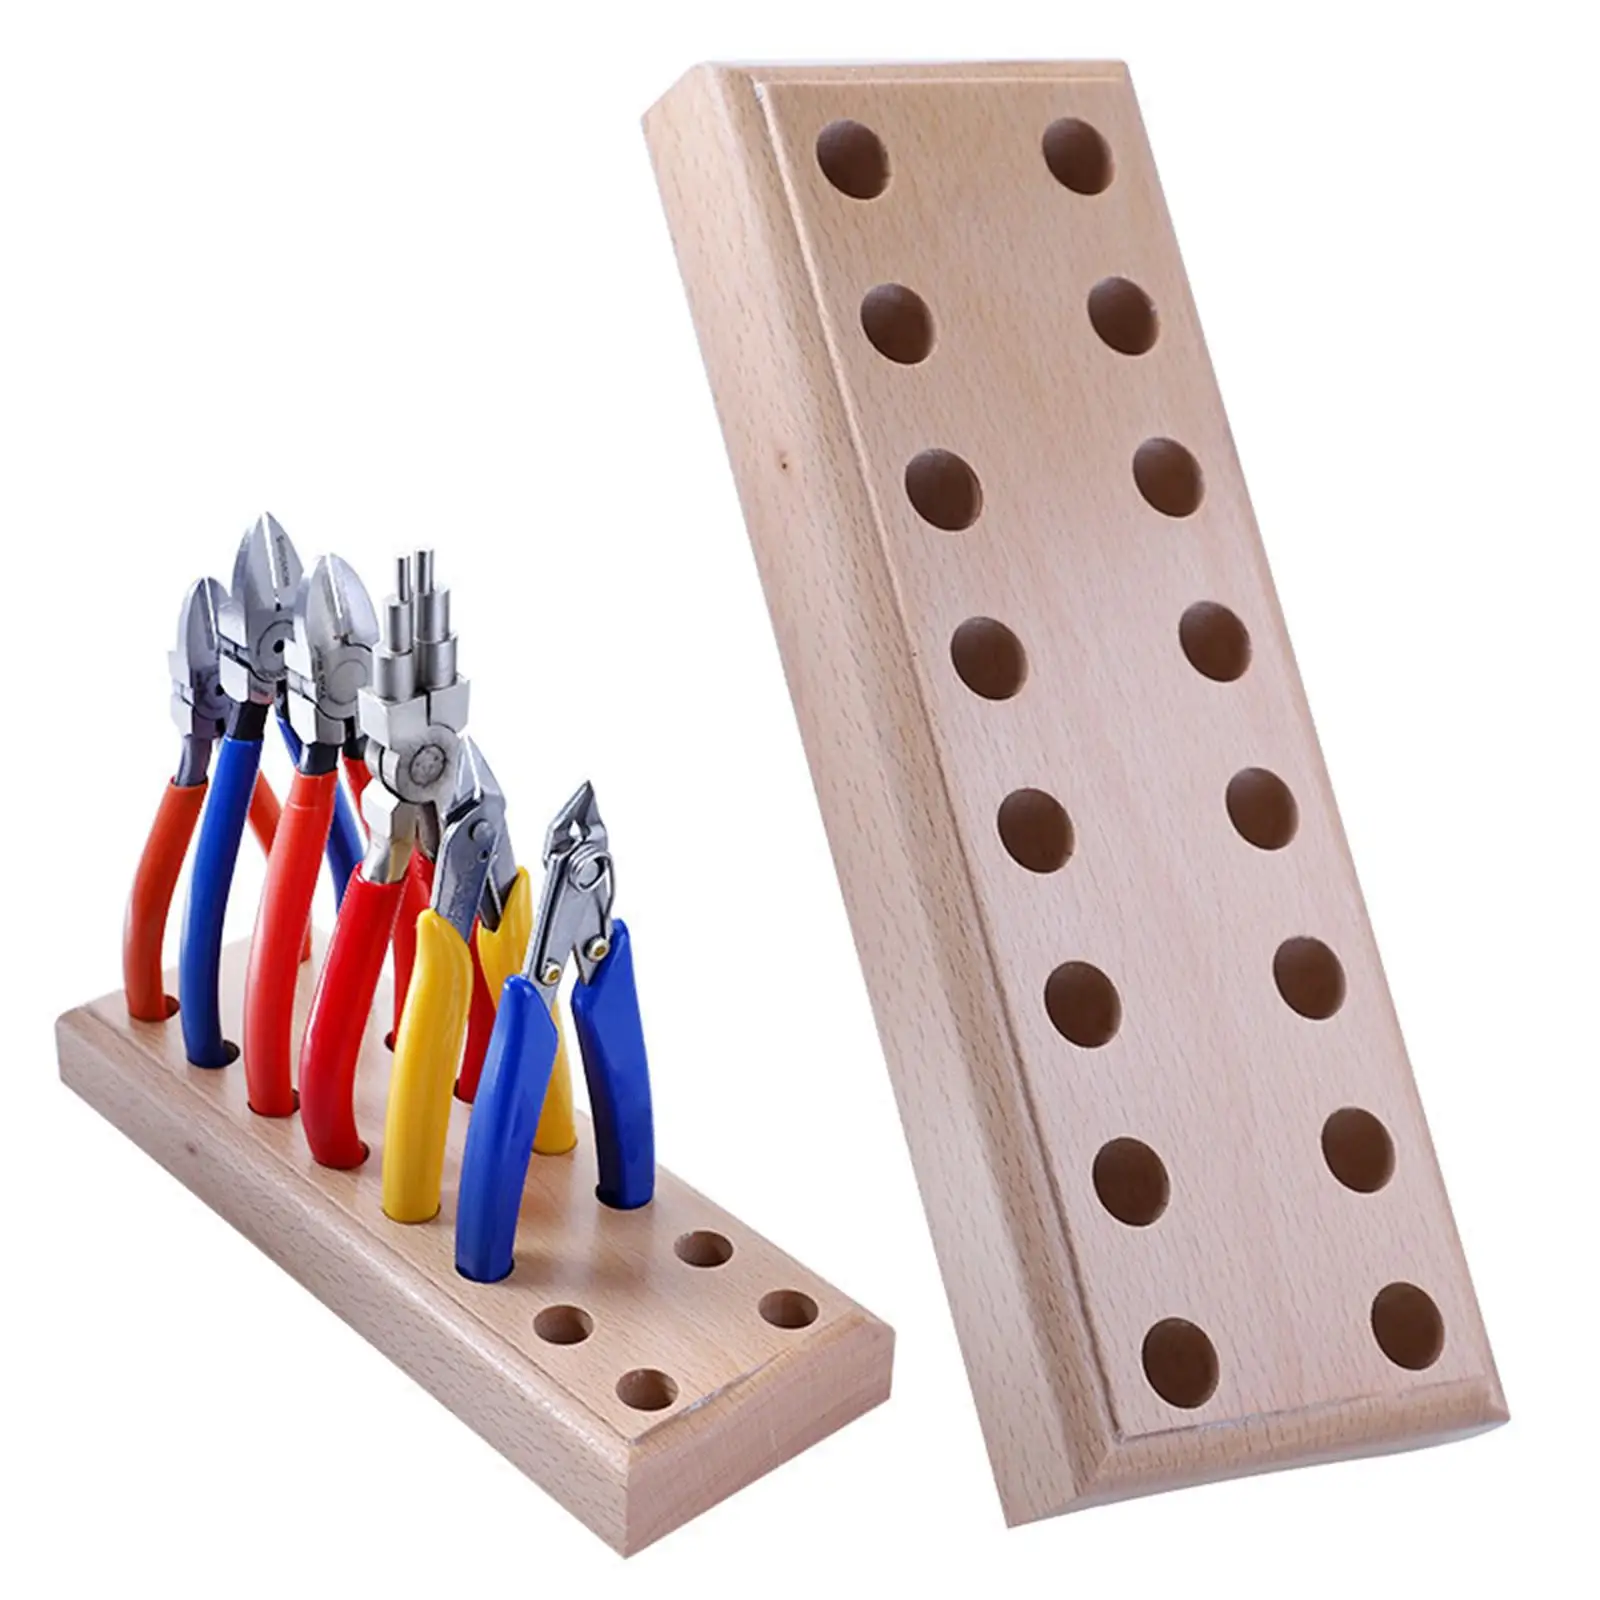 16 Holes Wood Plier Block Desktop Base Stand Tool Storage Wood Pallet Jewelry Making Supplies DIY Crafting Beading Accs